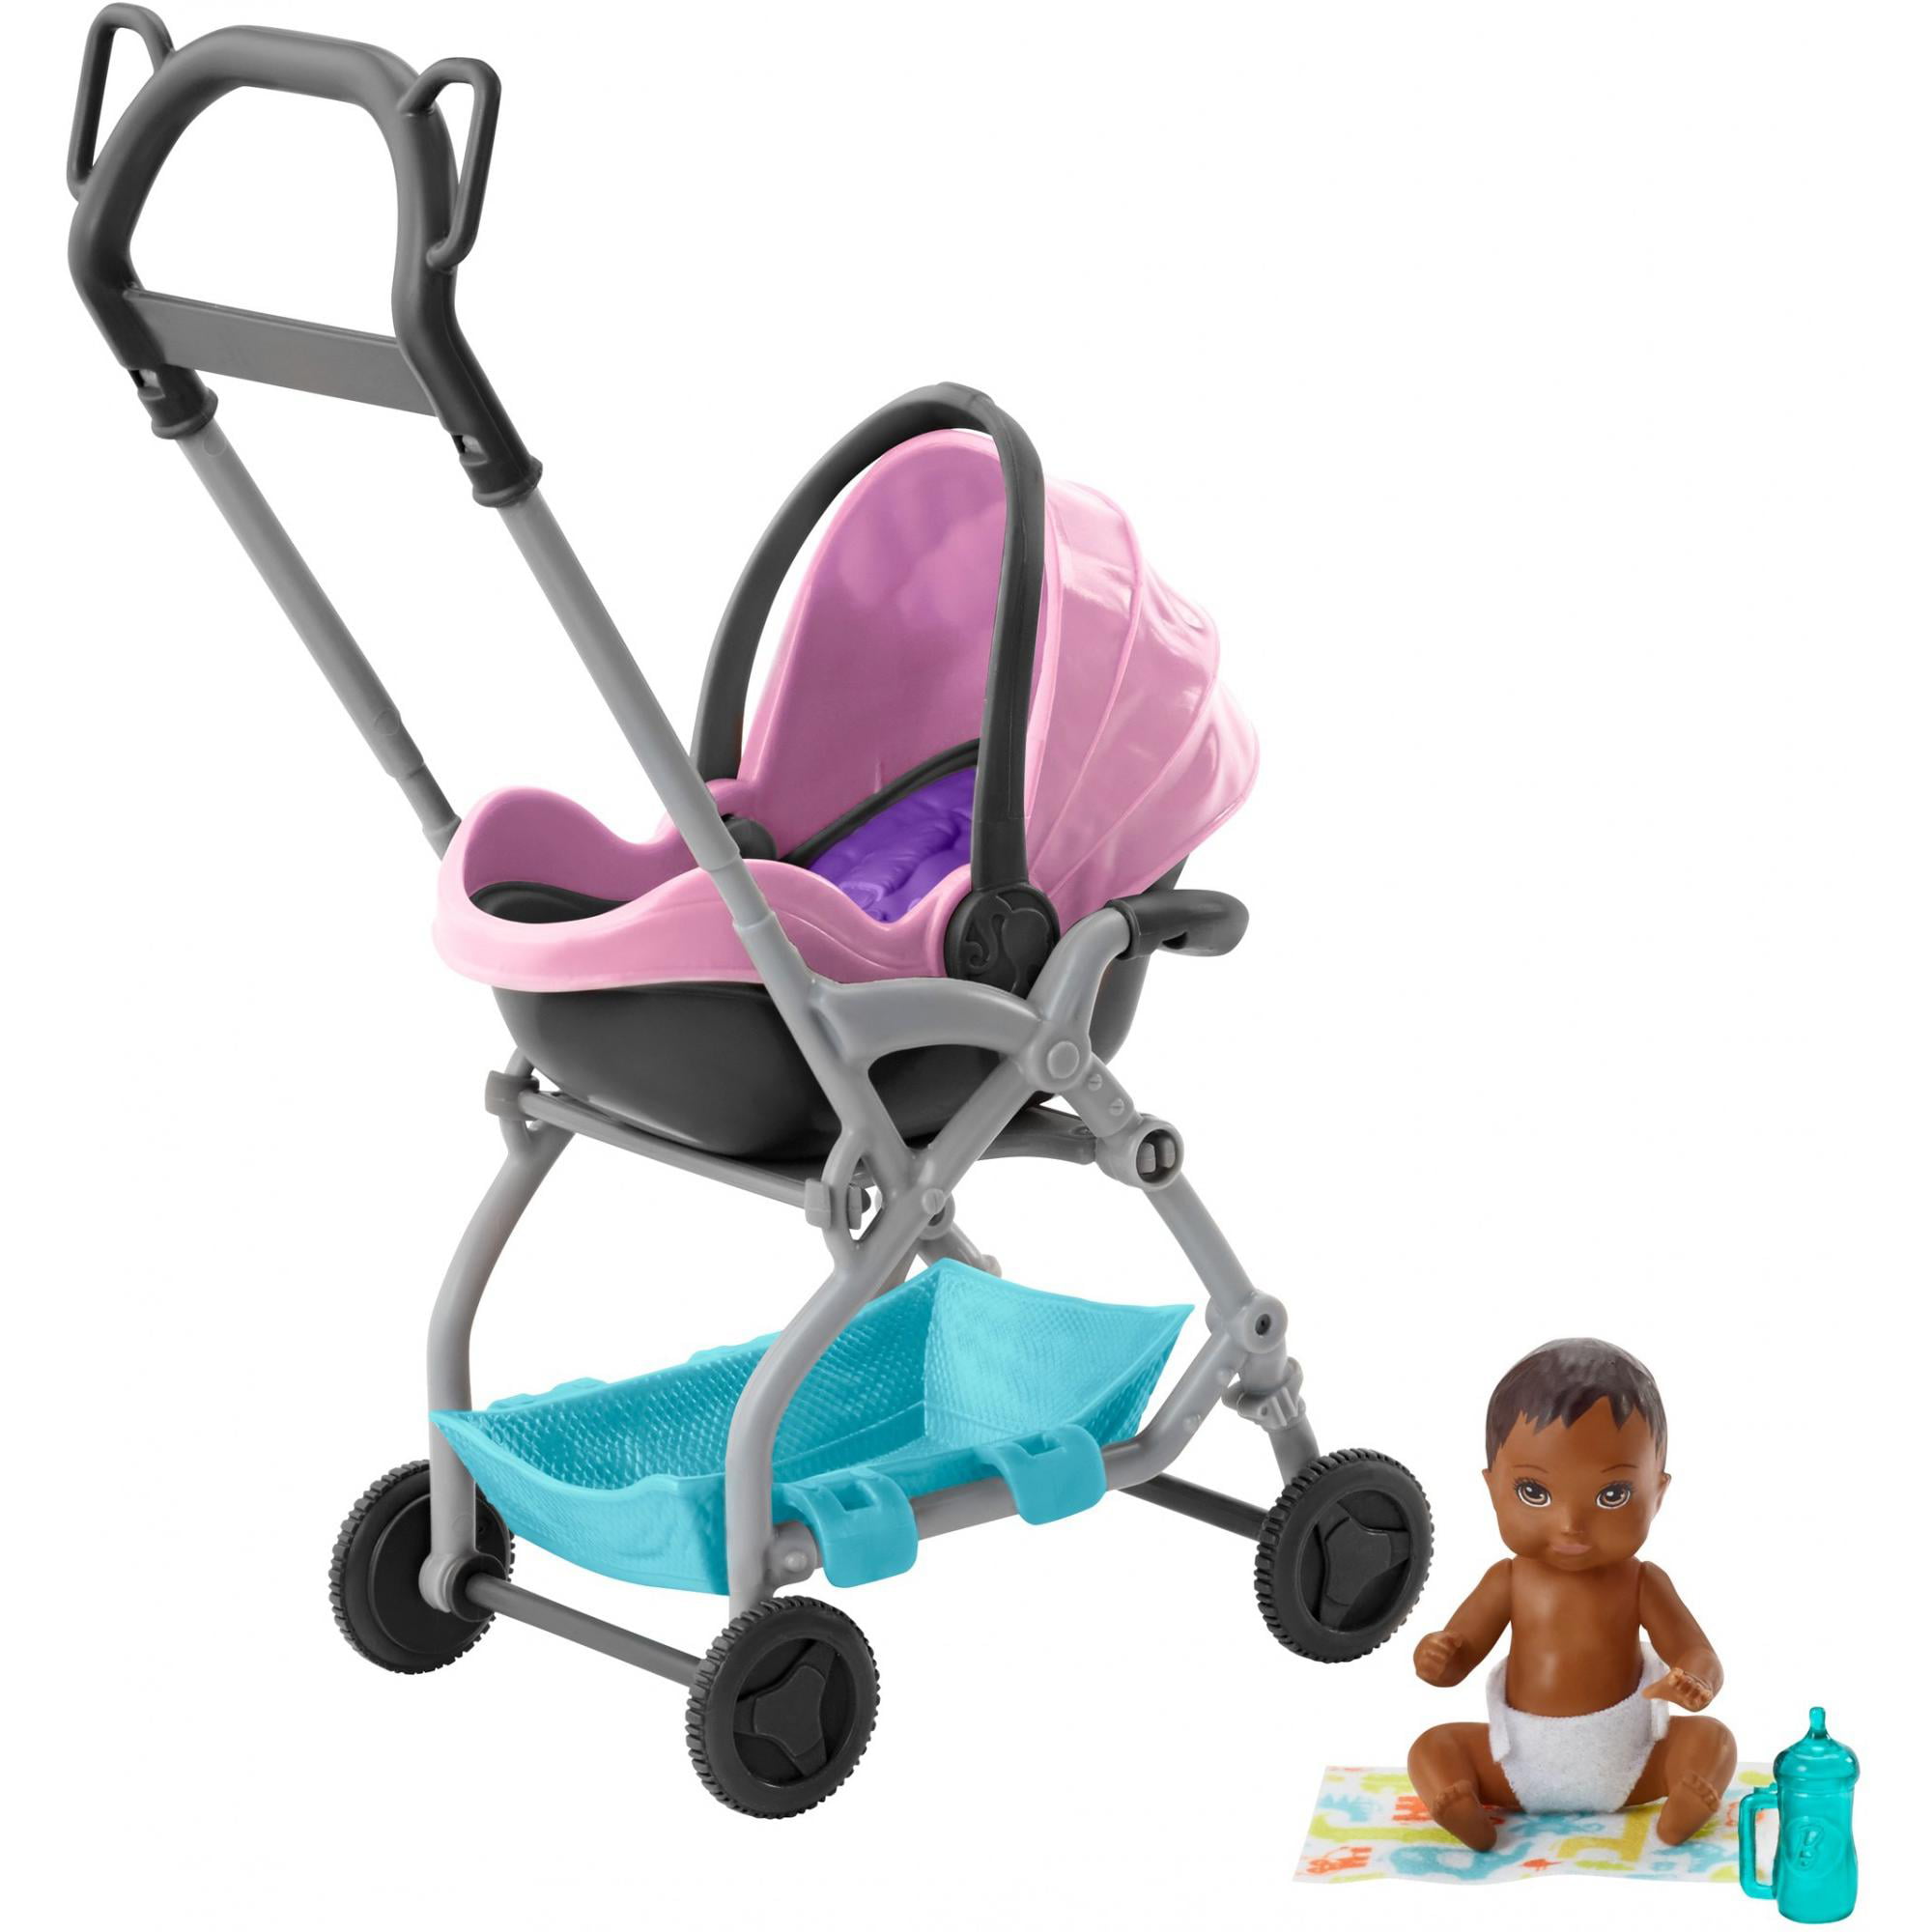 Barbie® Skipper™ Babysitters Inc.™ Doll + Accessories, 1 ct - Kroger